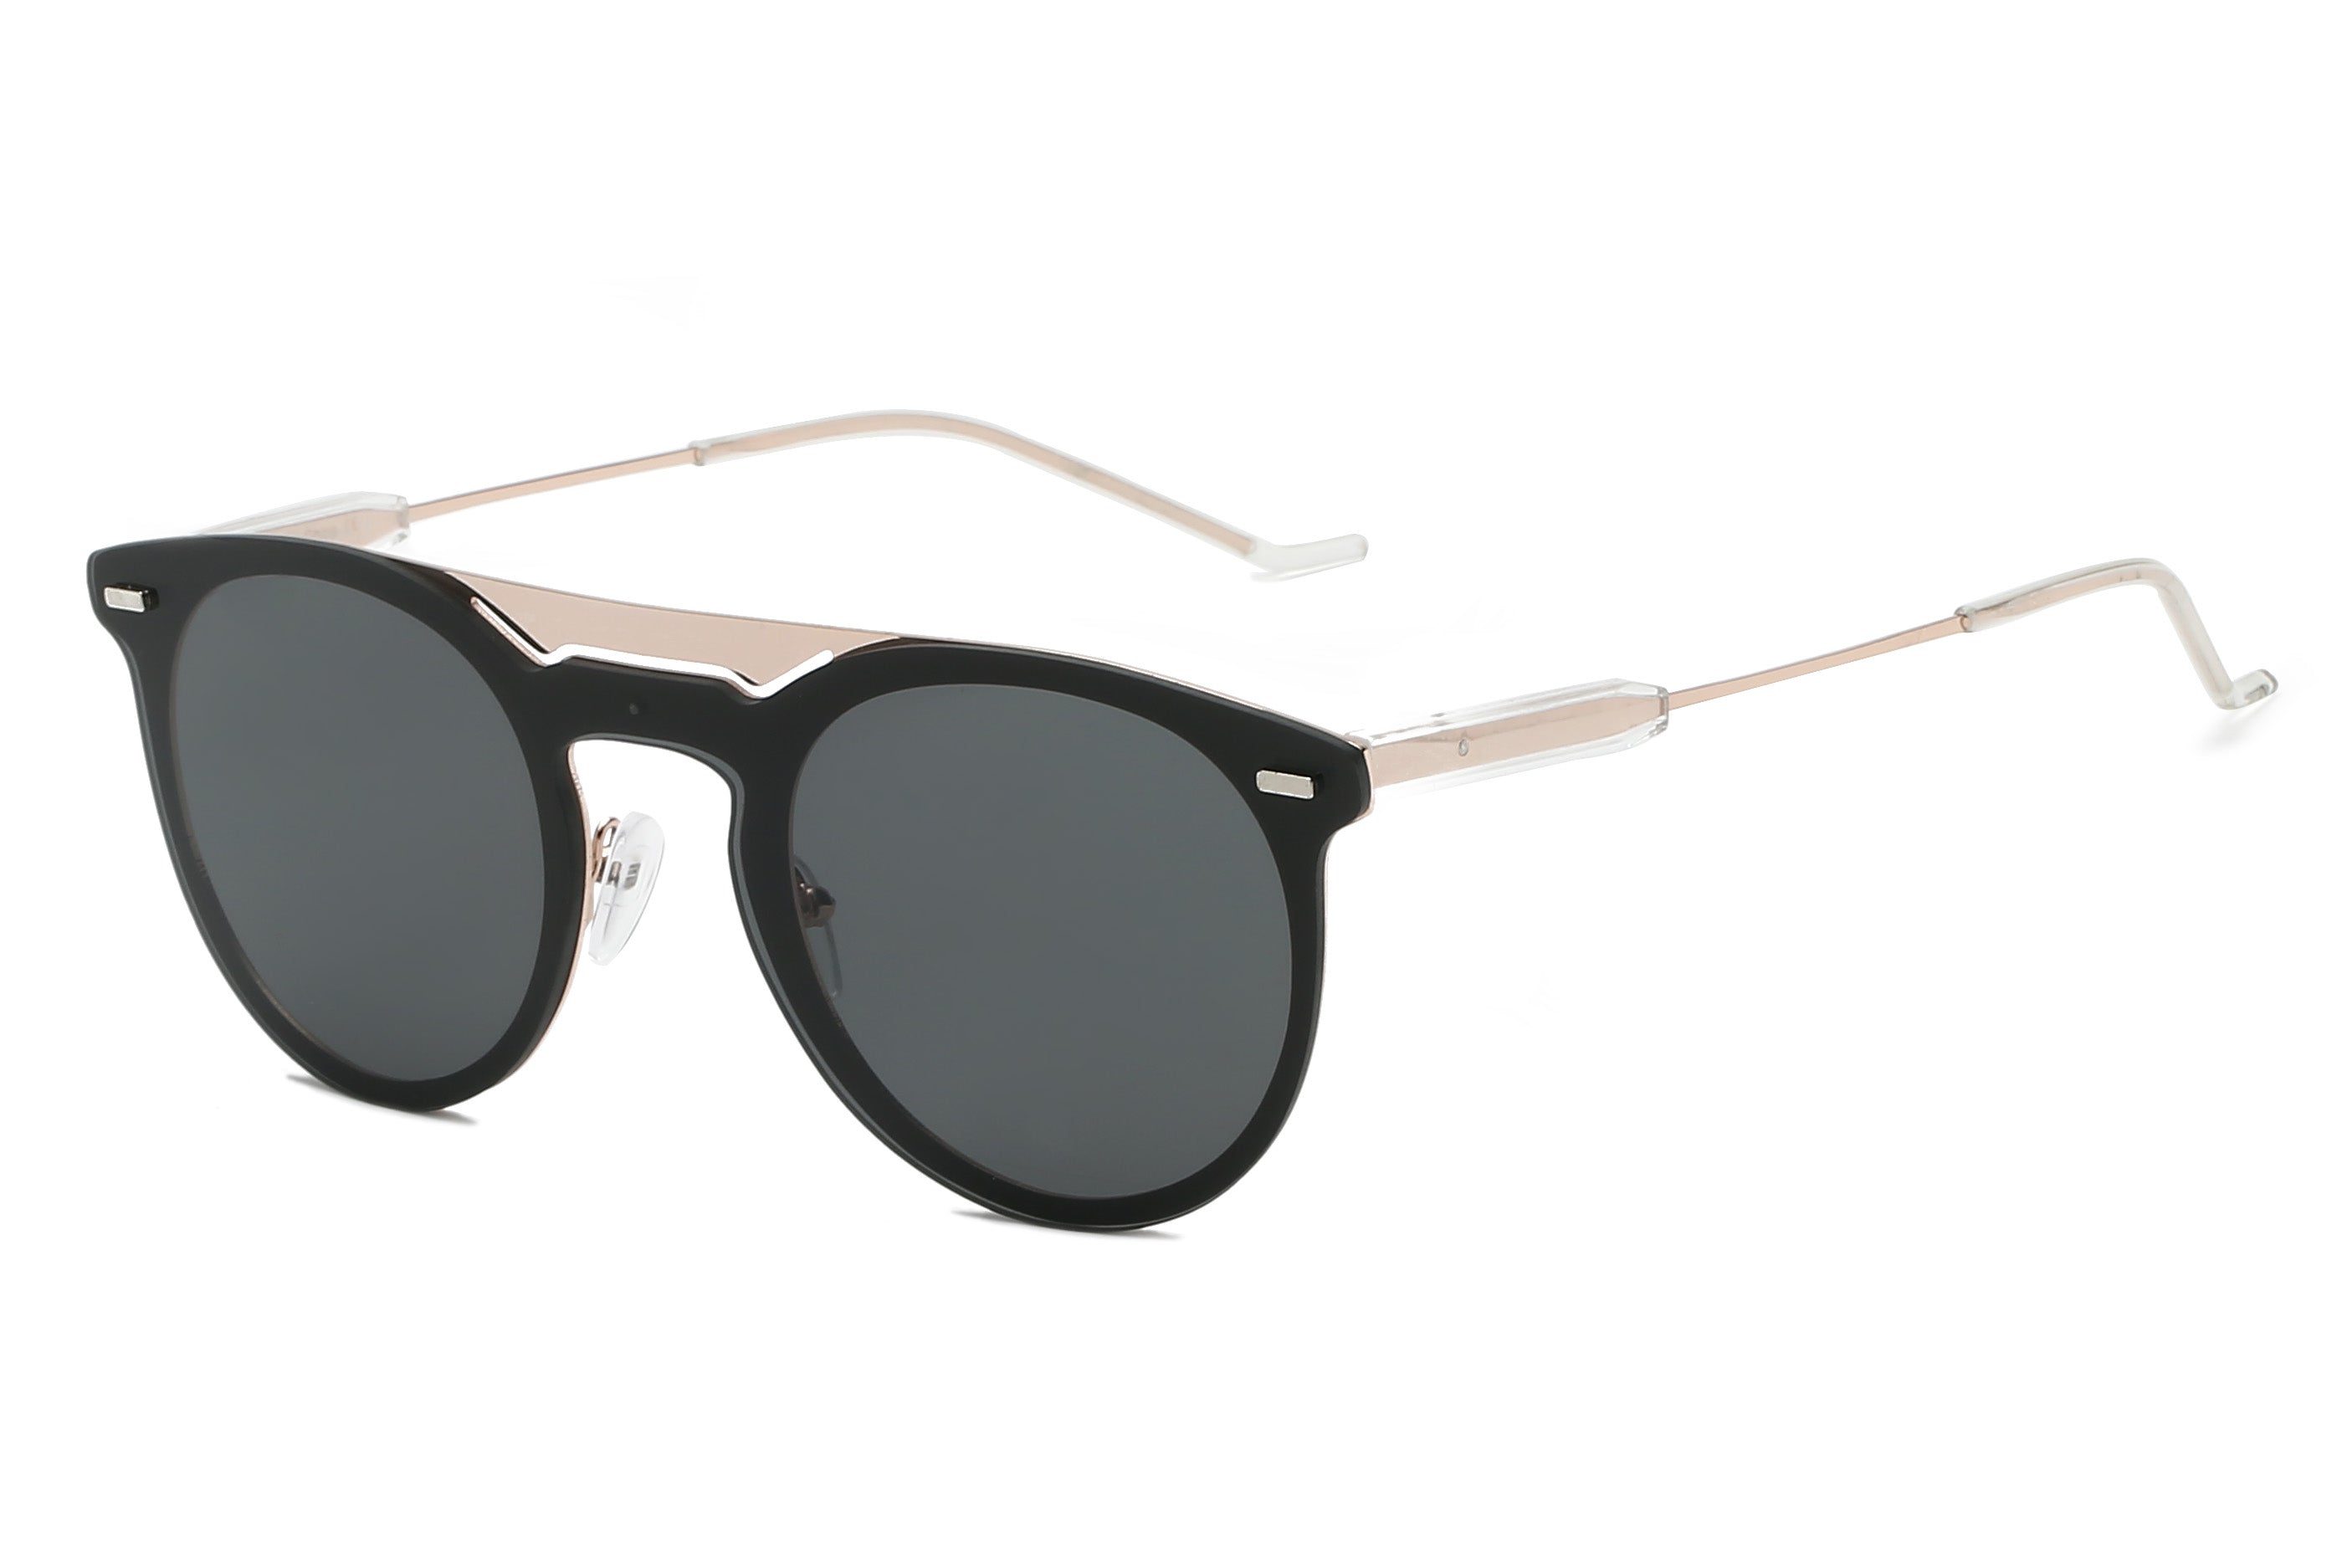 S3010 - Retro Mirrored Circle Round Sunglasses Black